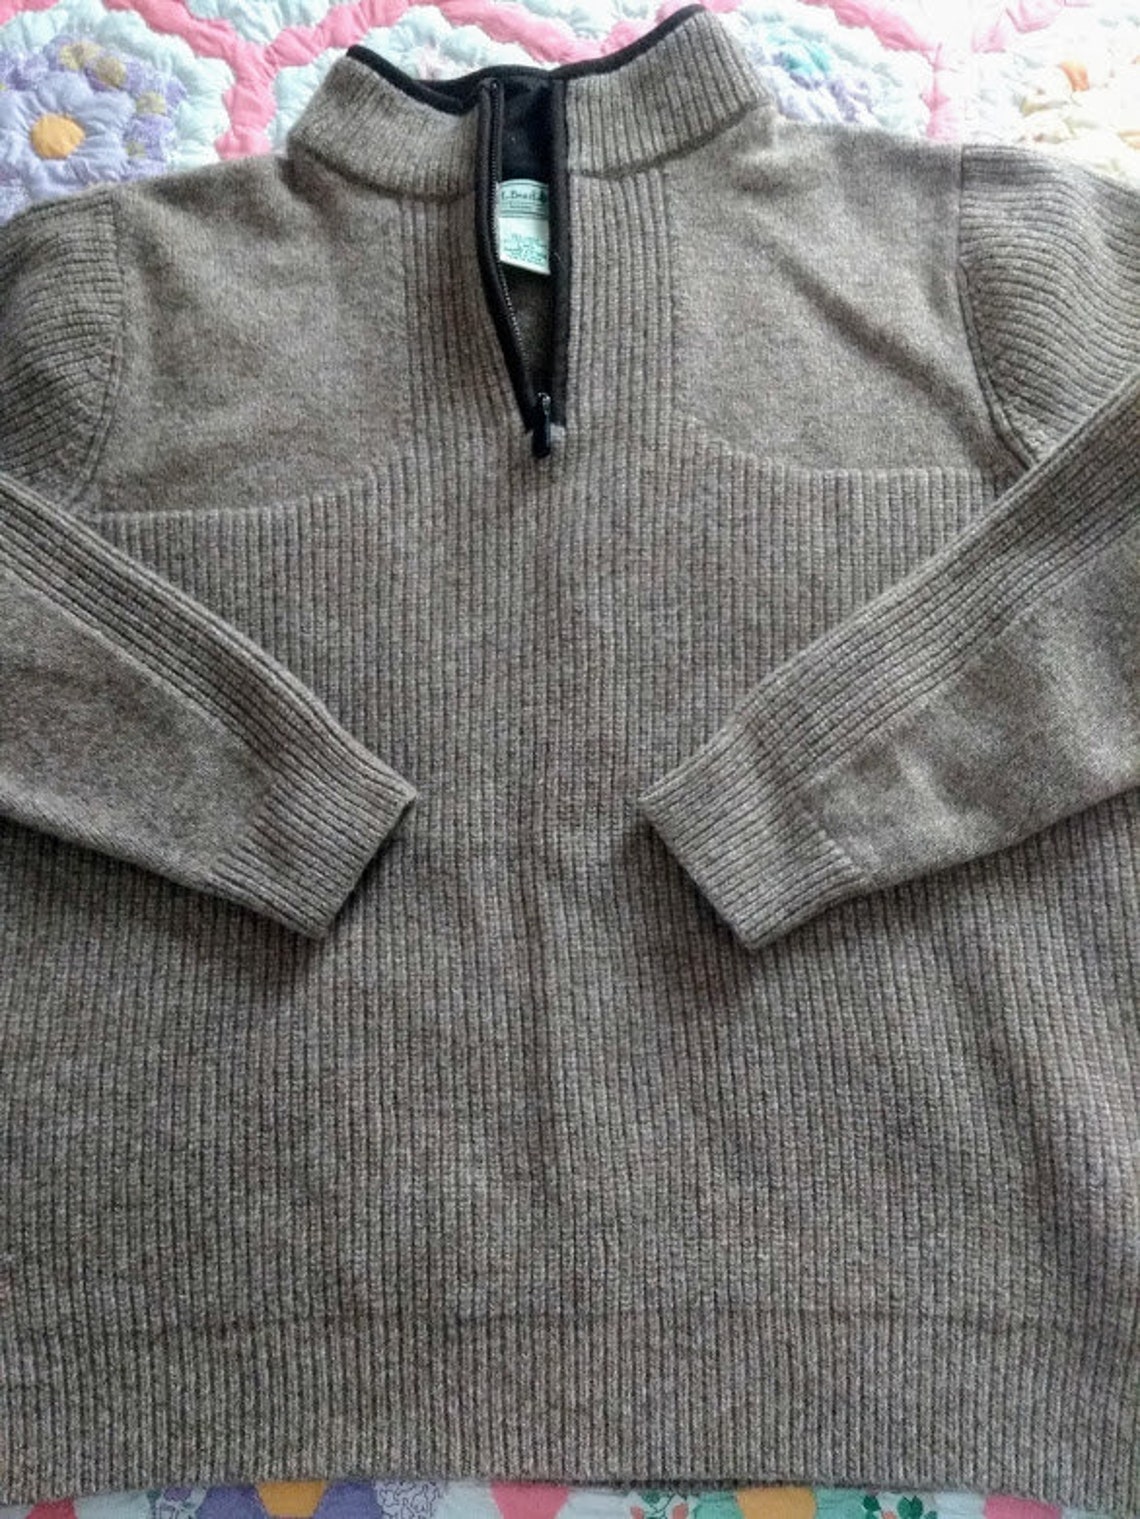 LL Bean Wool Zip Henley Sweater 100% Merino Lambswool | Etsy